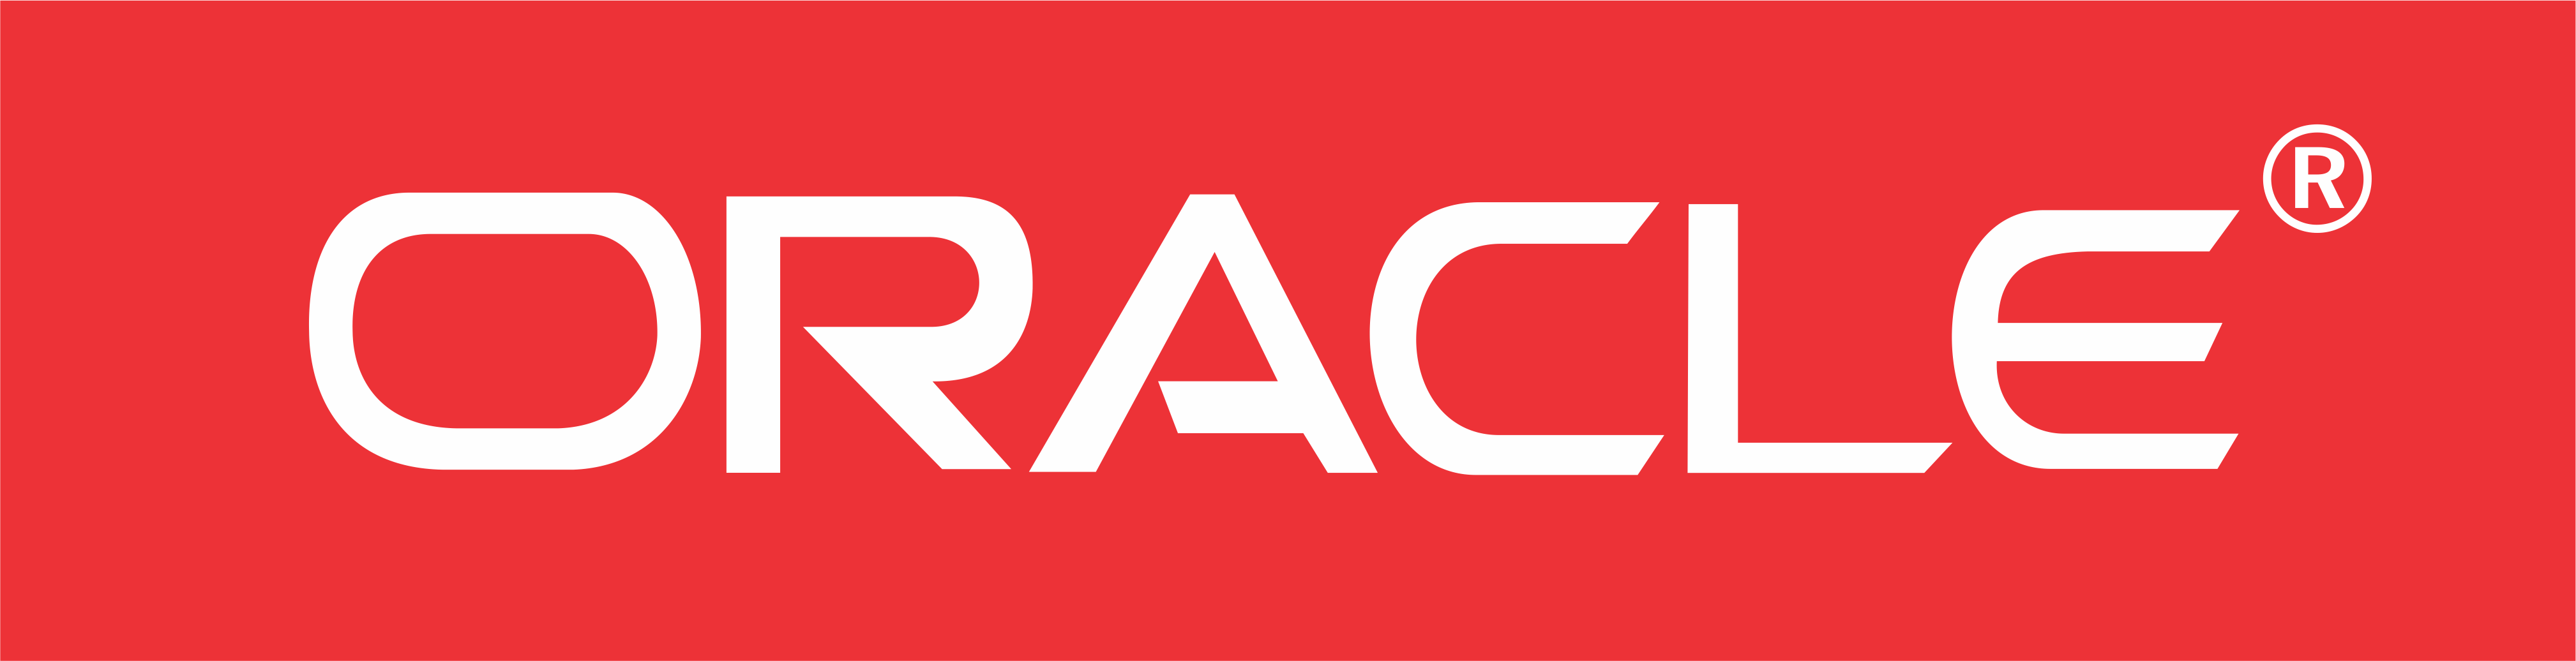 Oracle Company Logo - oracle logo | ololoshenka | Technology articles, Technology ...